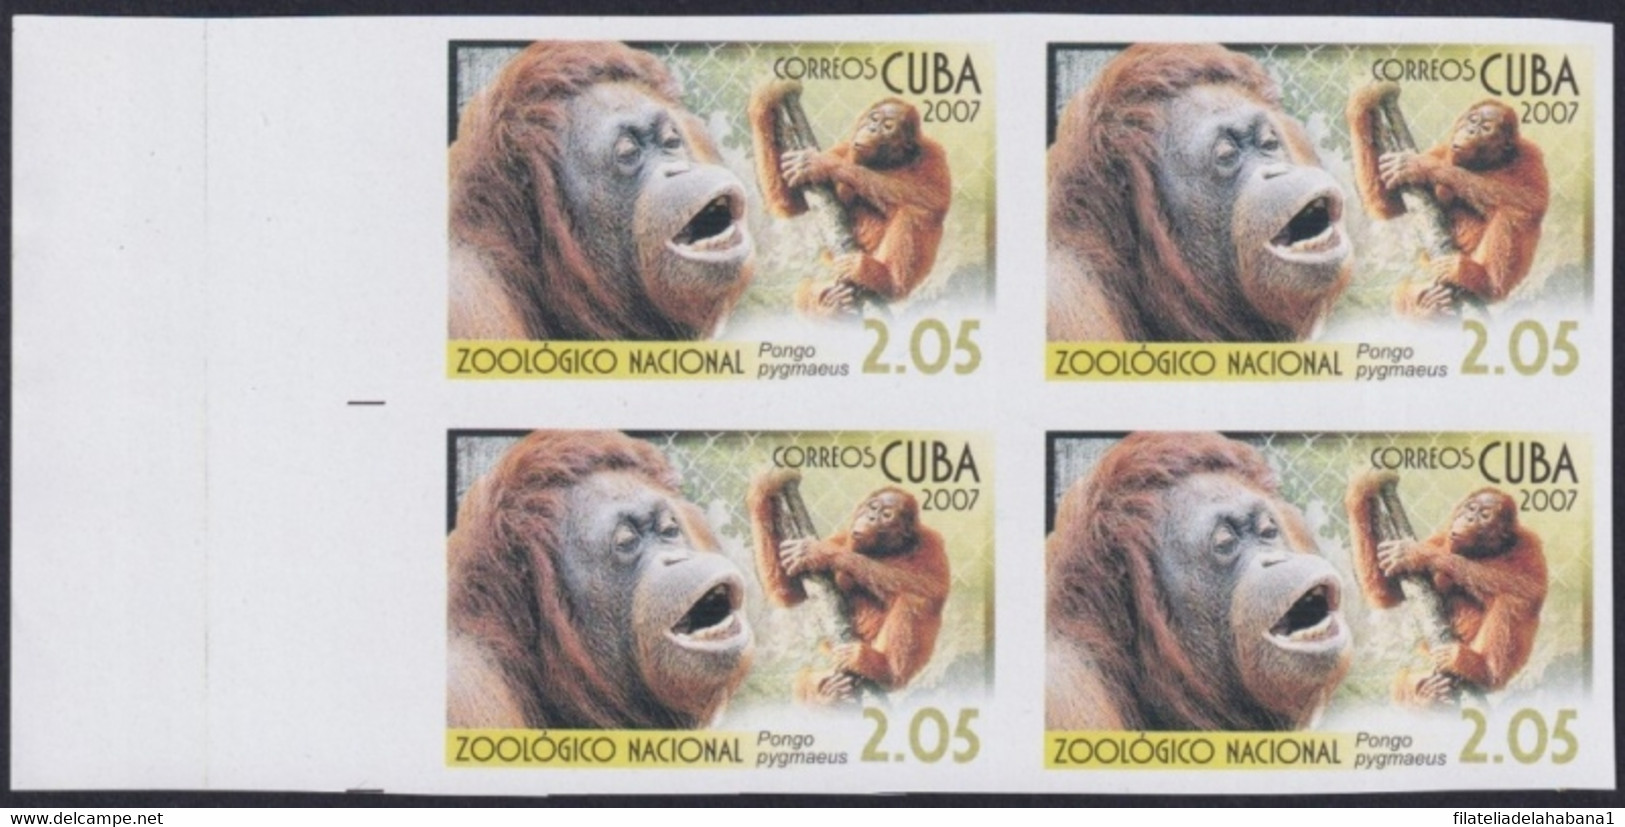 2007.707 CUBA 2007 2.05$ MNH IMPERFORATED PROOF VIRGEN KEY FAUNA ZOO MONKEY MONO ORANGUTAN. - Imperforates, Proofs & Errors